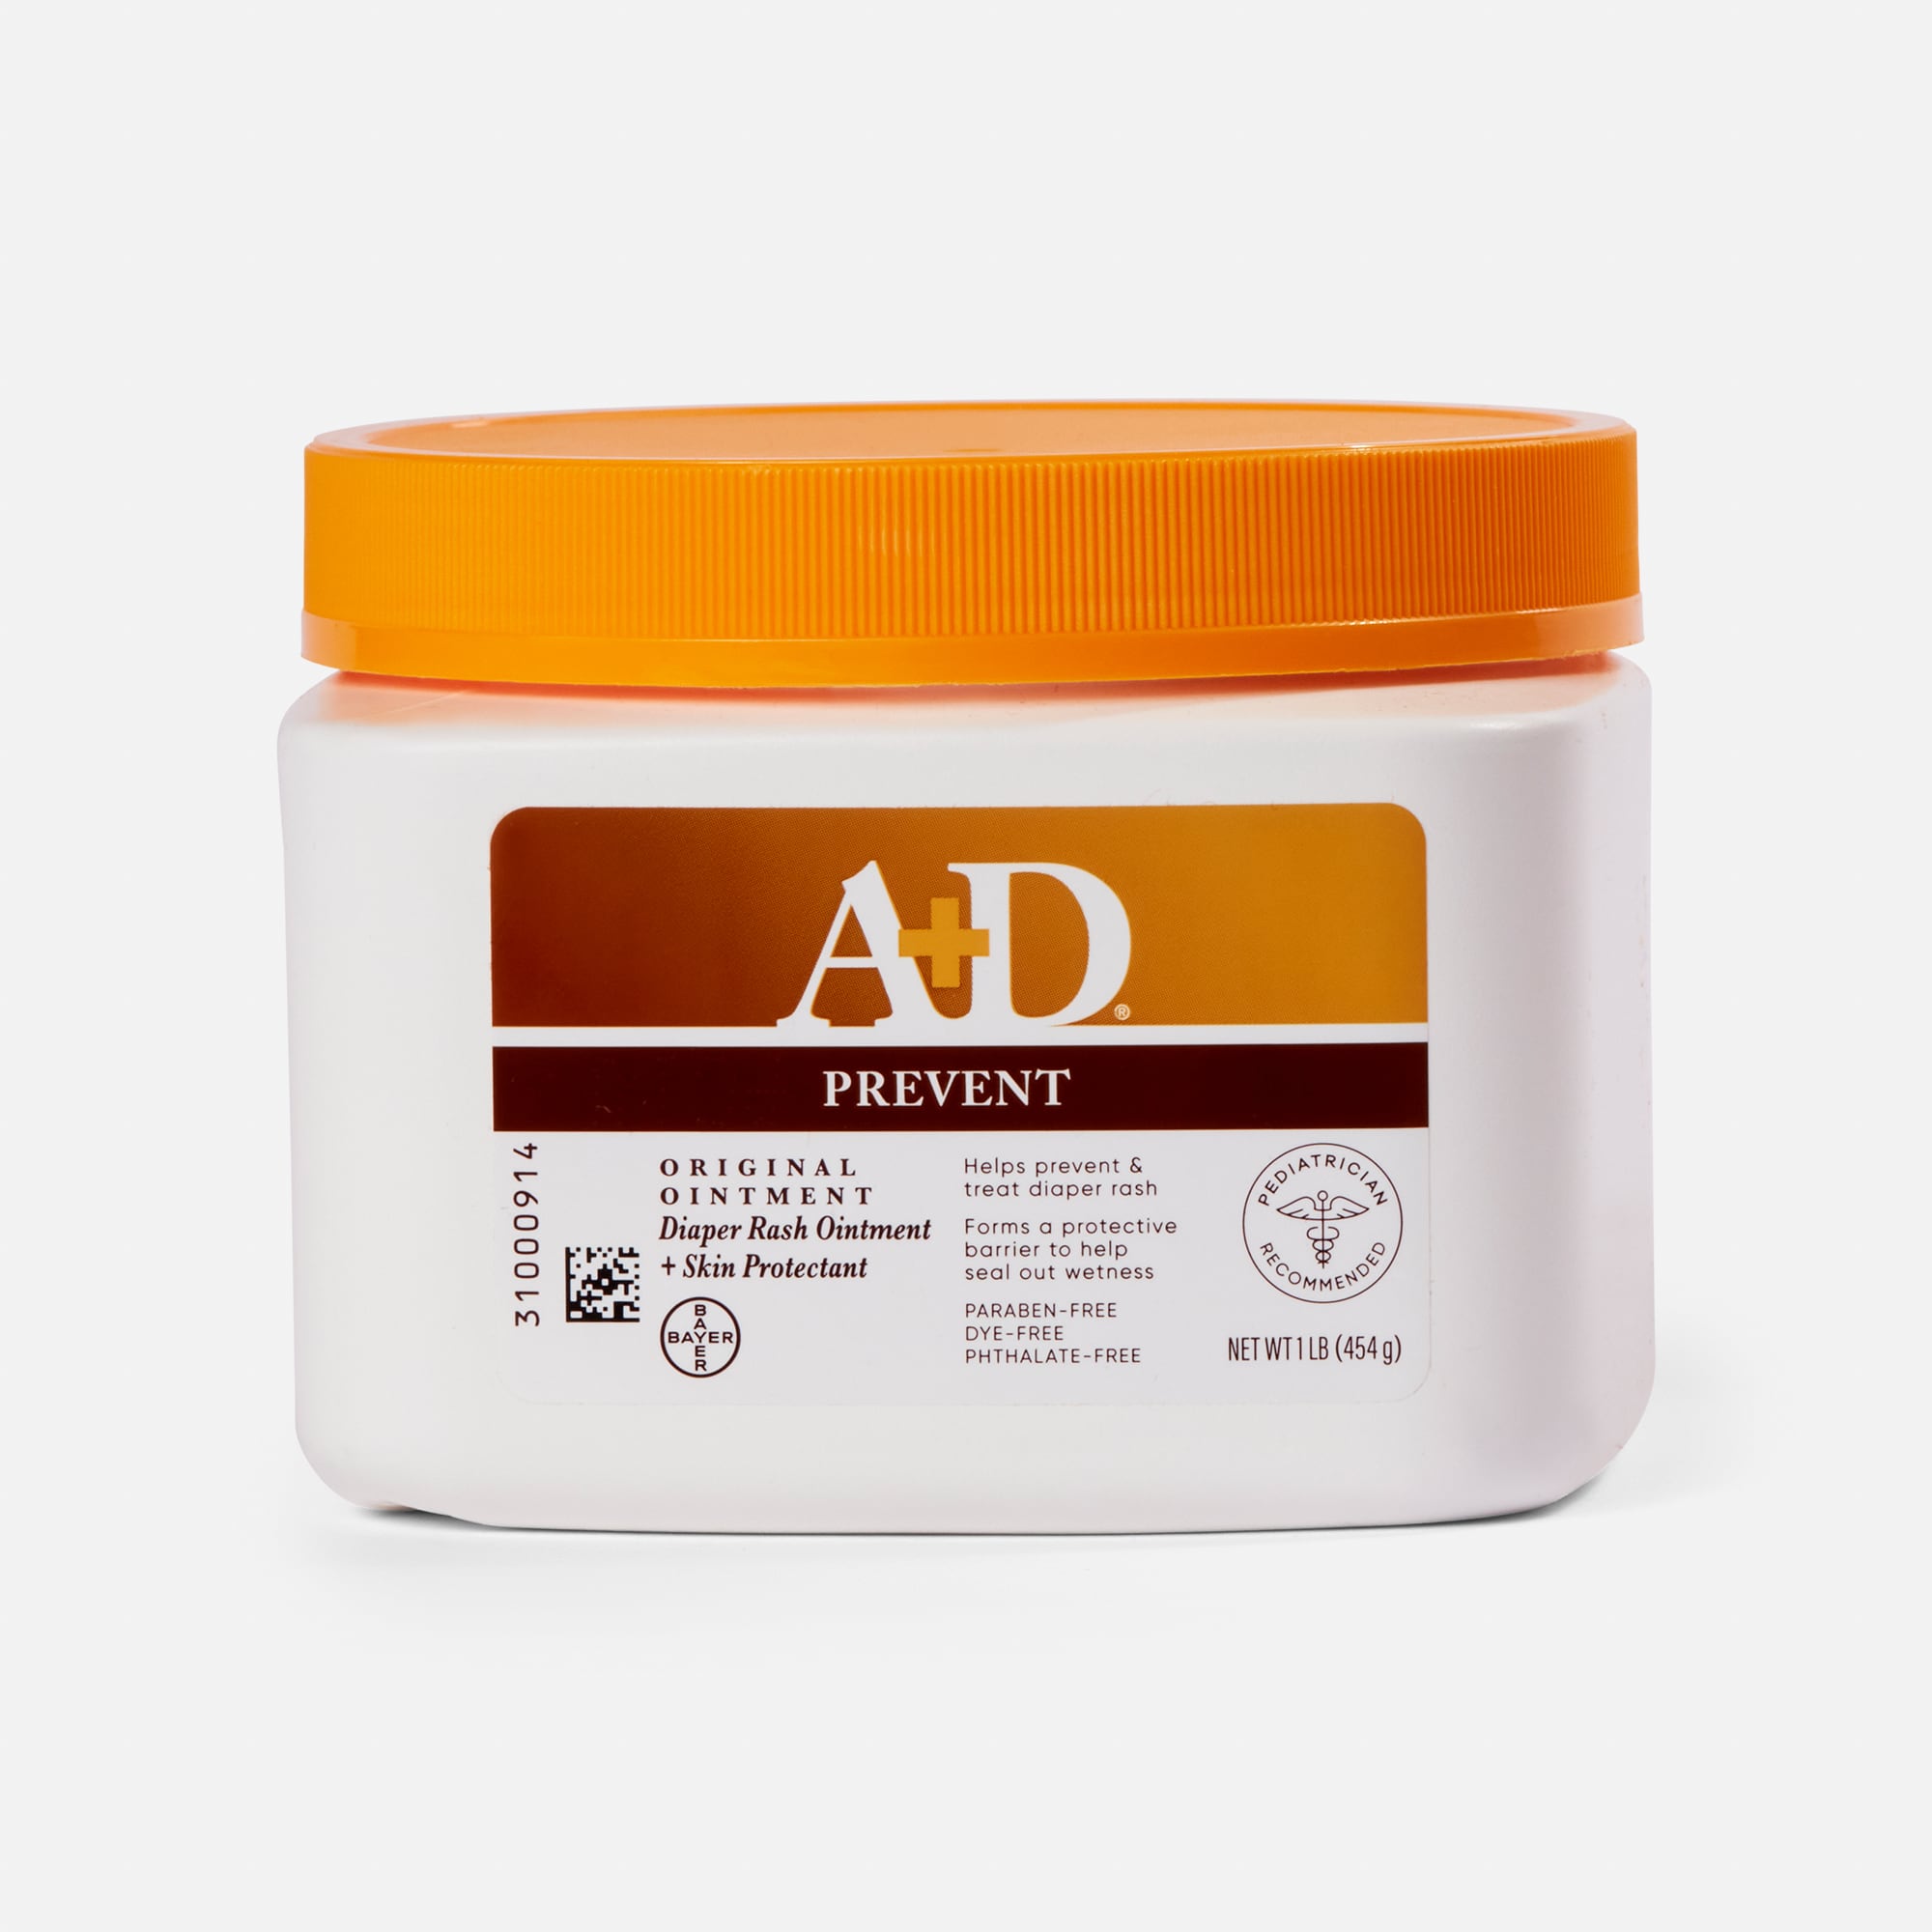 A&D Diaper Rash & Skin Protectant Ointment